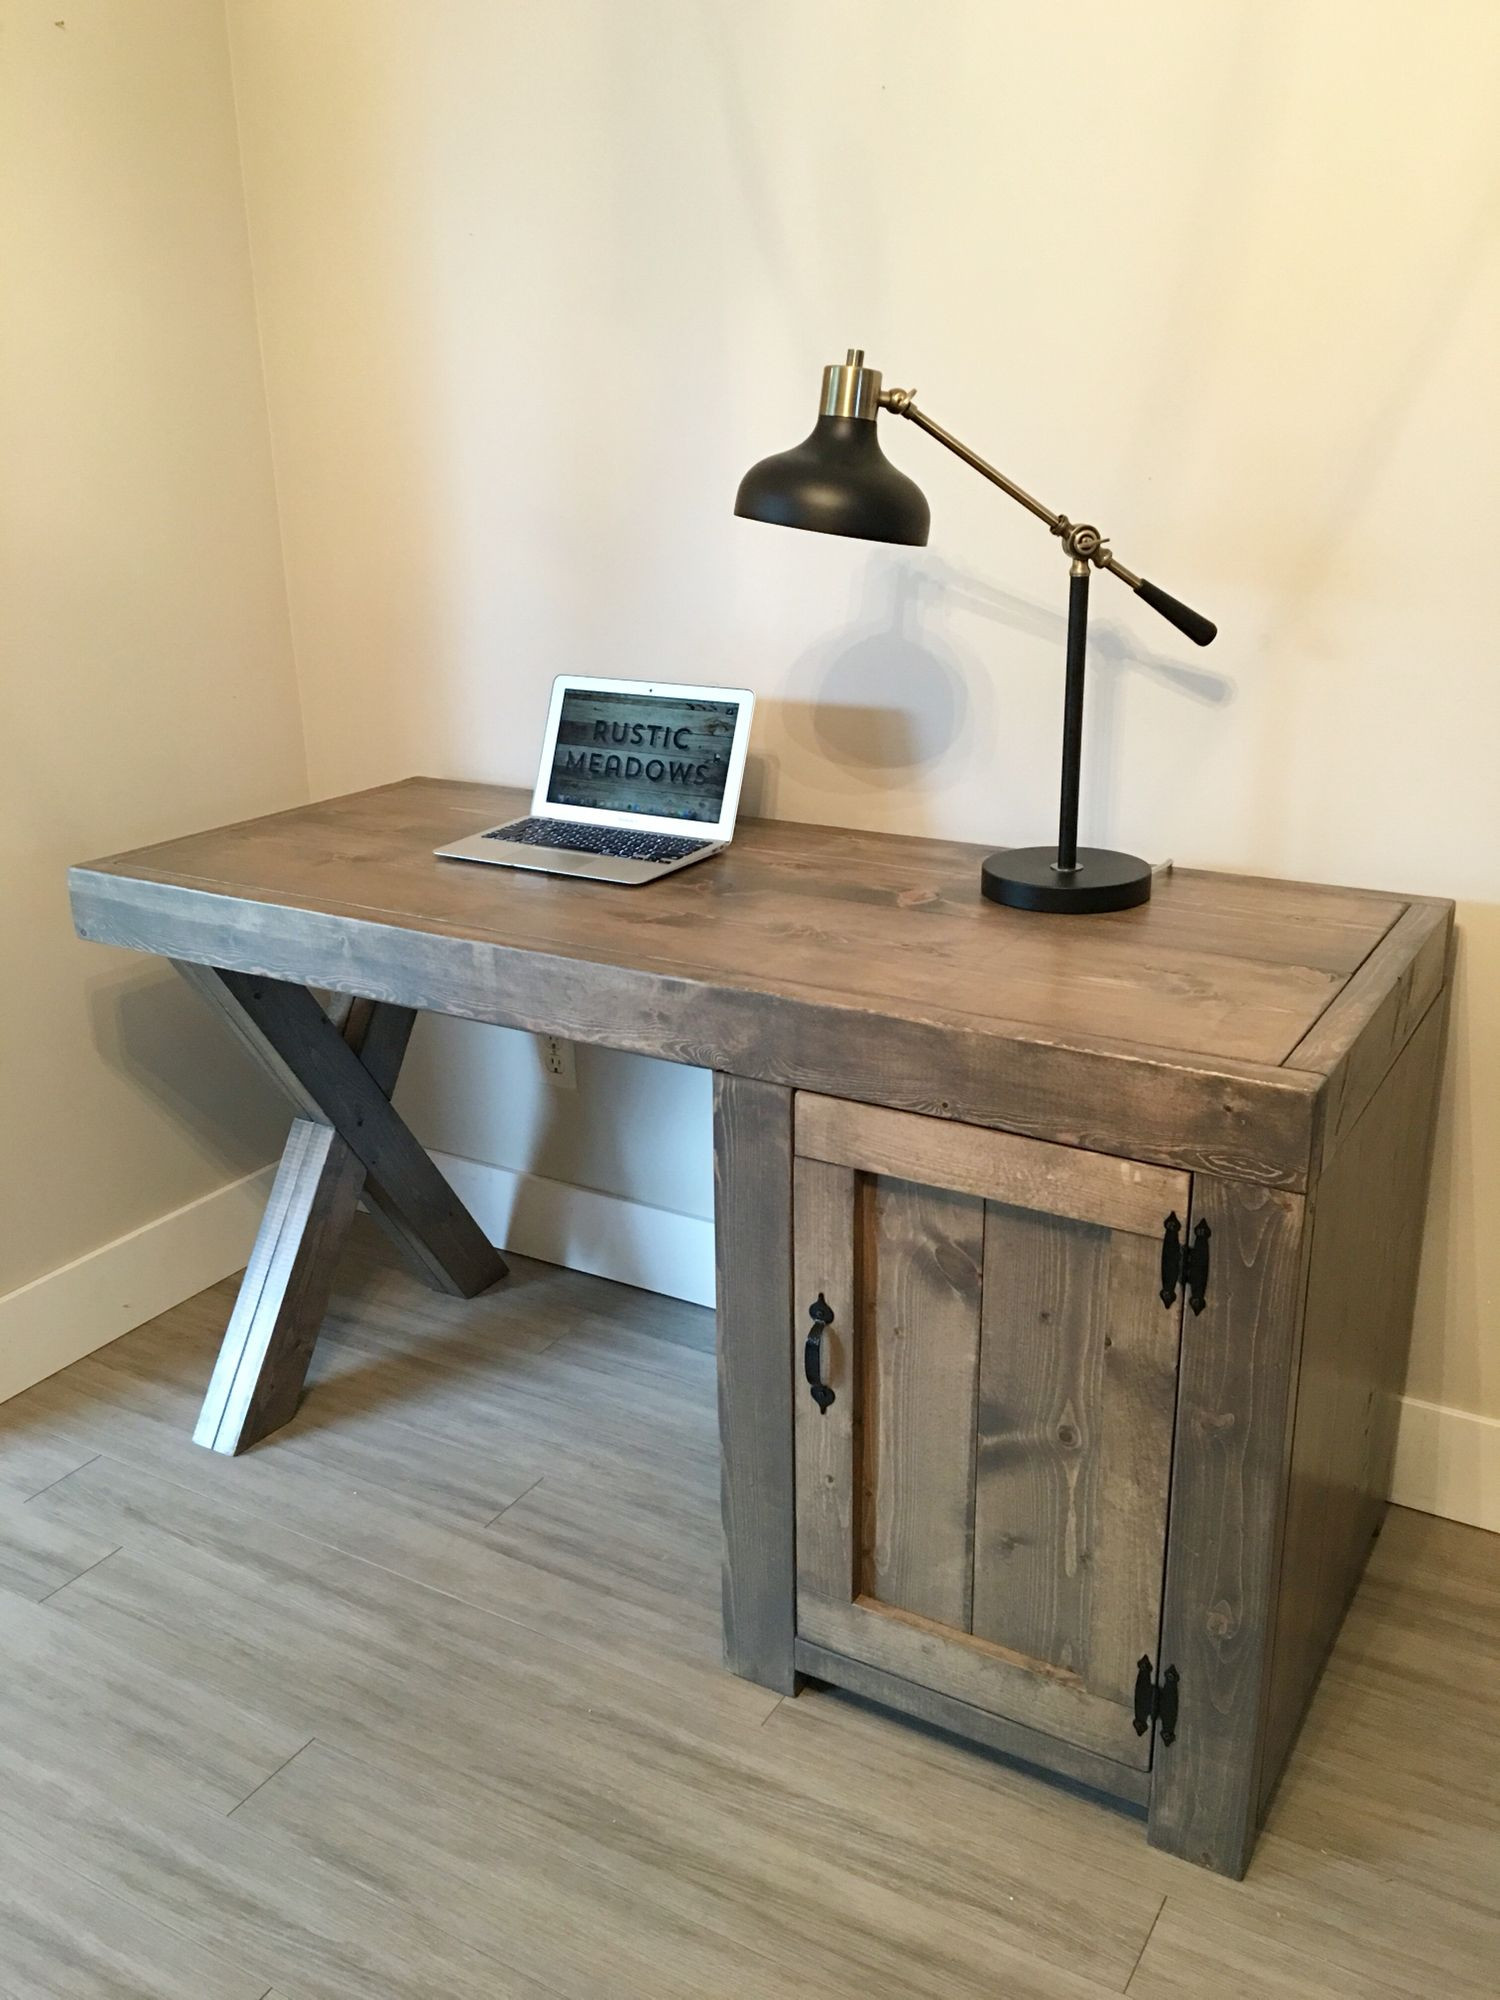 Best ideas about DIY Wood Computer Desk
. Save or Pin 23 DIY puter Desk Ideas That Make More Spirit Work Now.